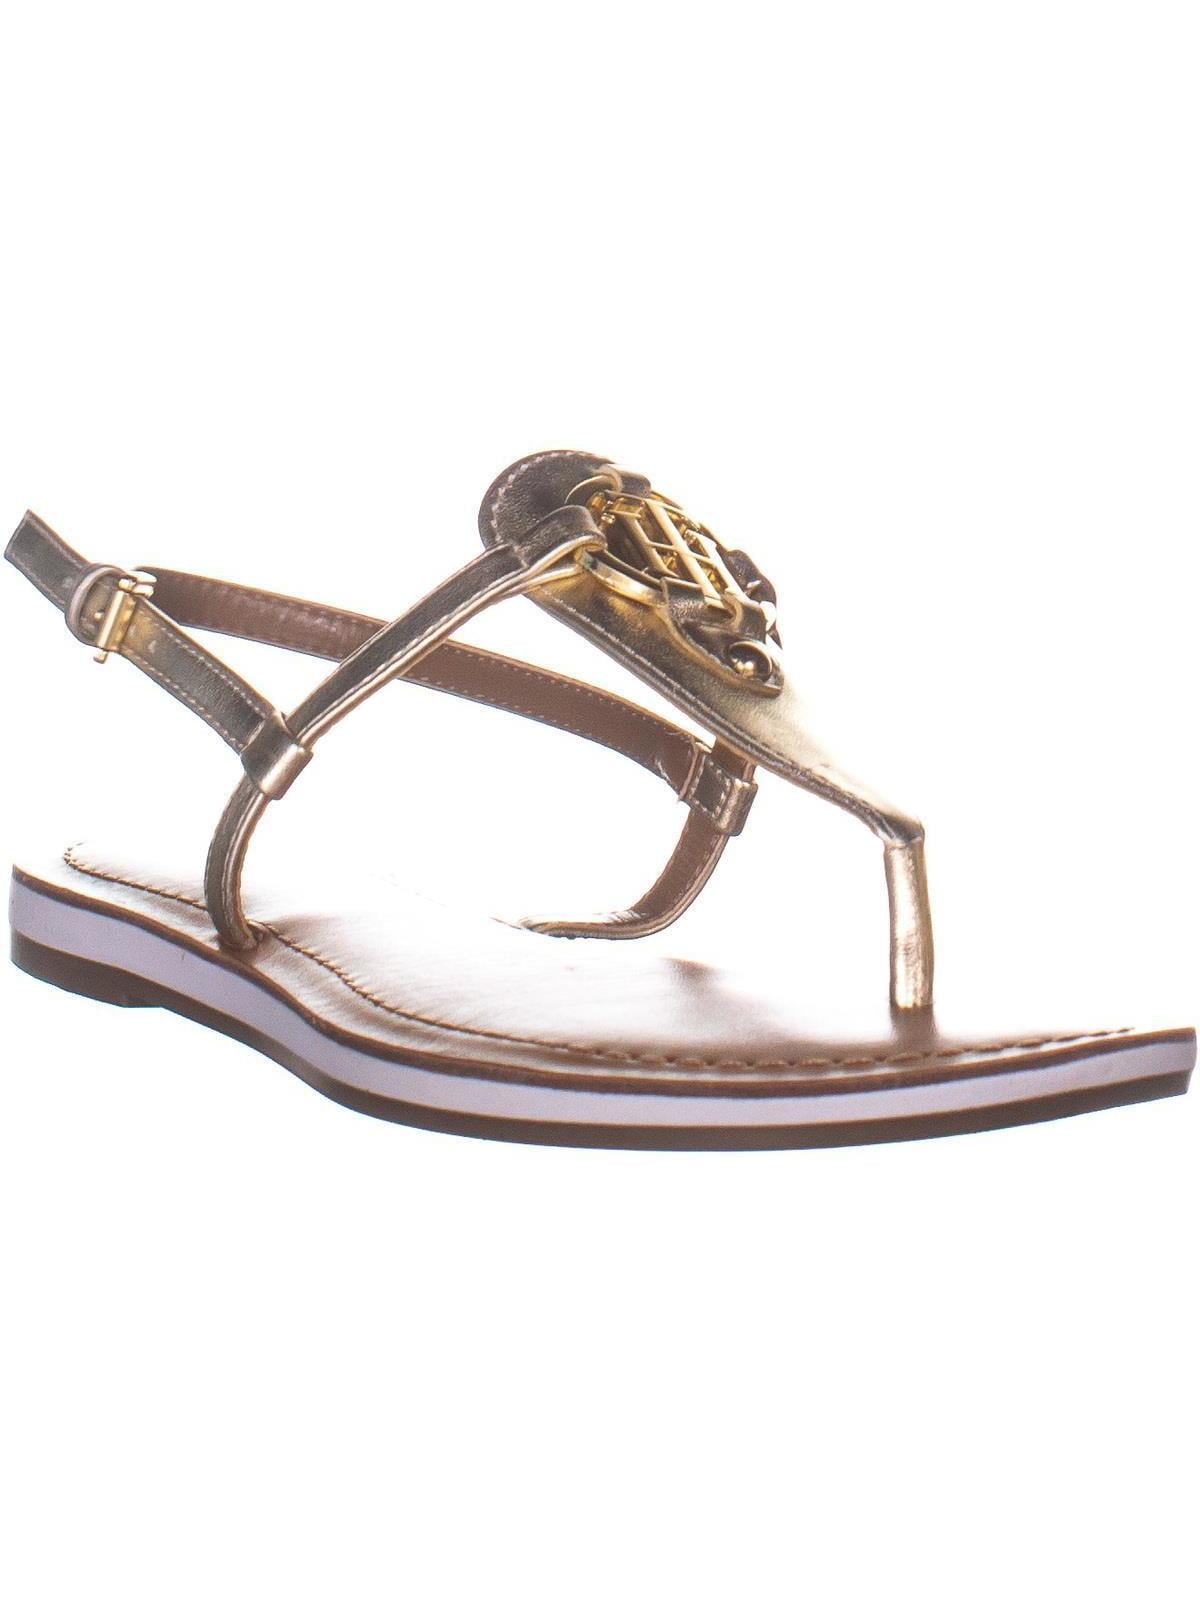 Tommy Hilfiger Genei Sling Back Flat Sandals, Gold, 8 - Walmart.com